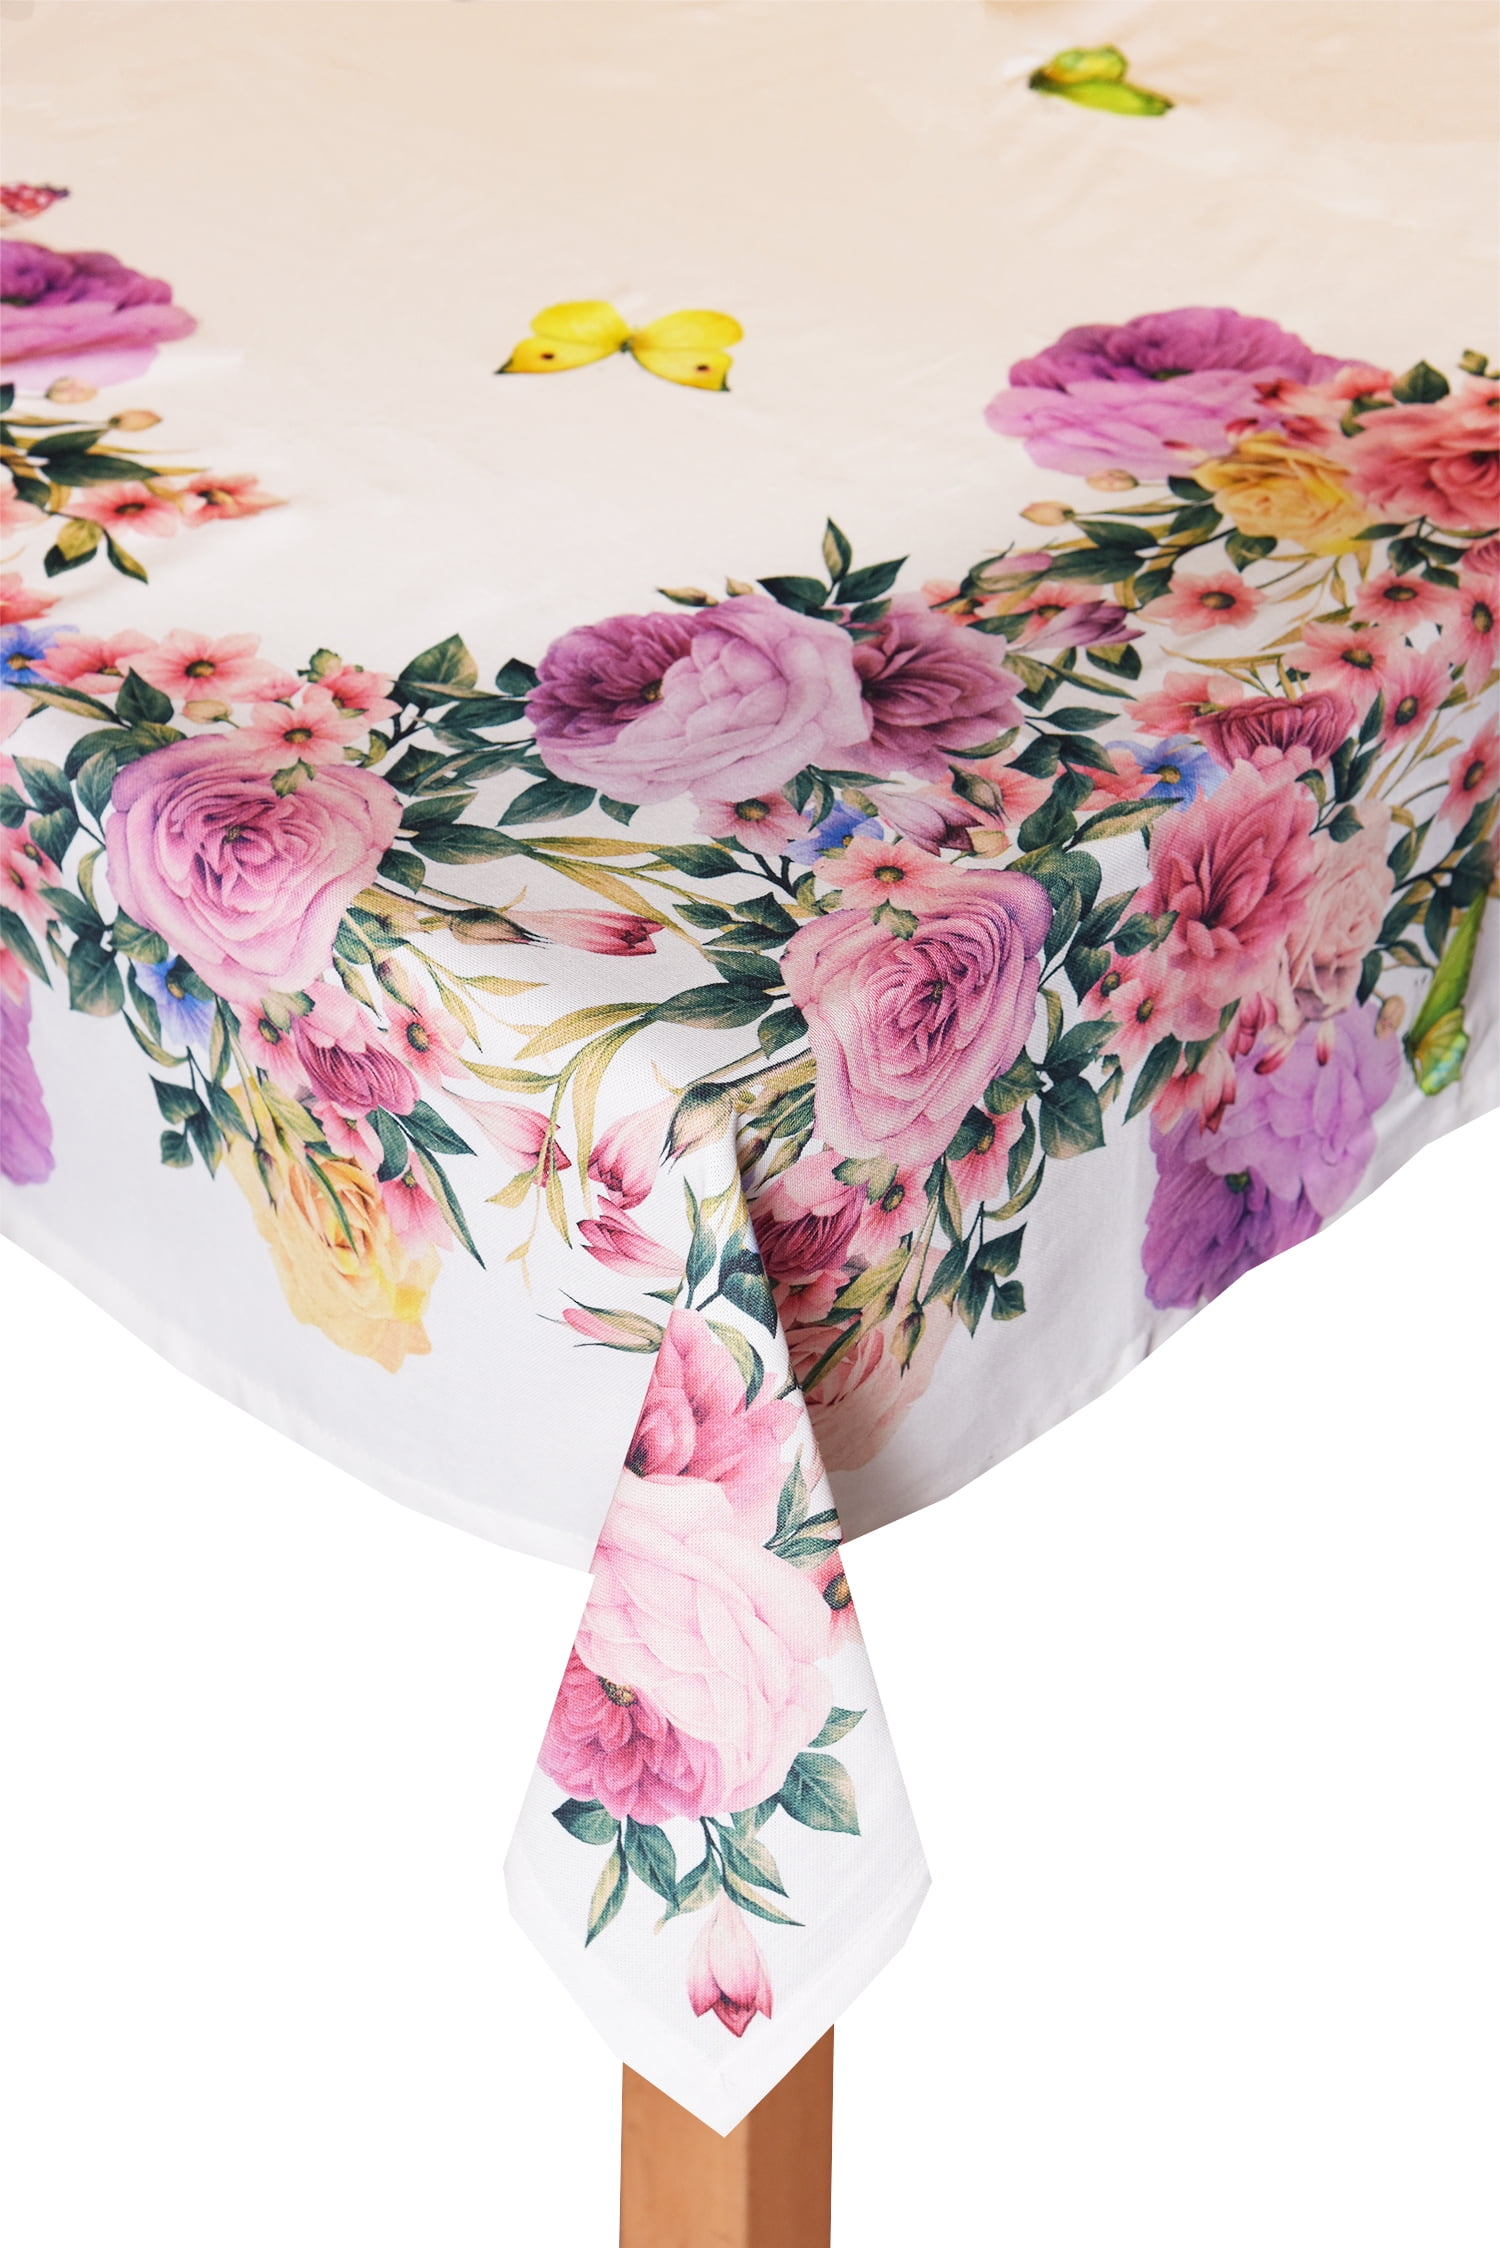 SALE 72x108" Rectangle 100% Cotton Color Flower Embroidery Tablecloth 12 Napkins 